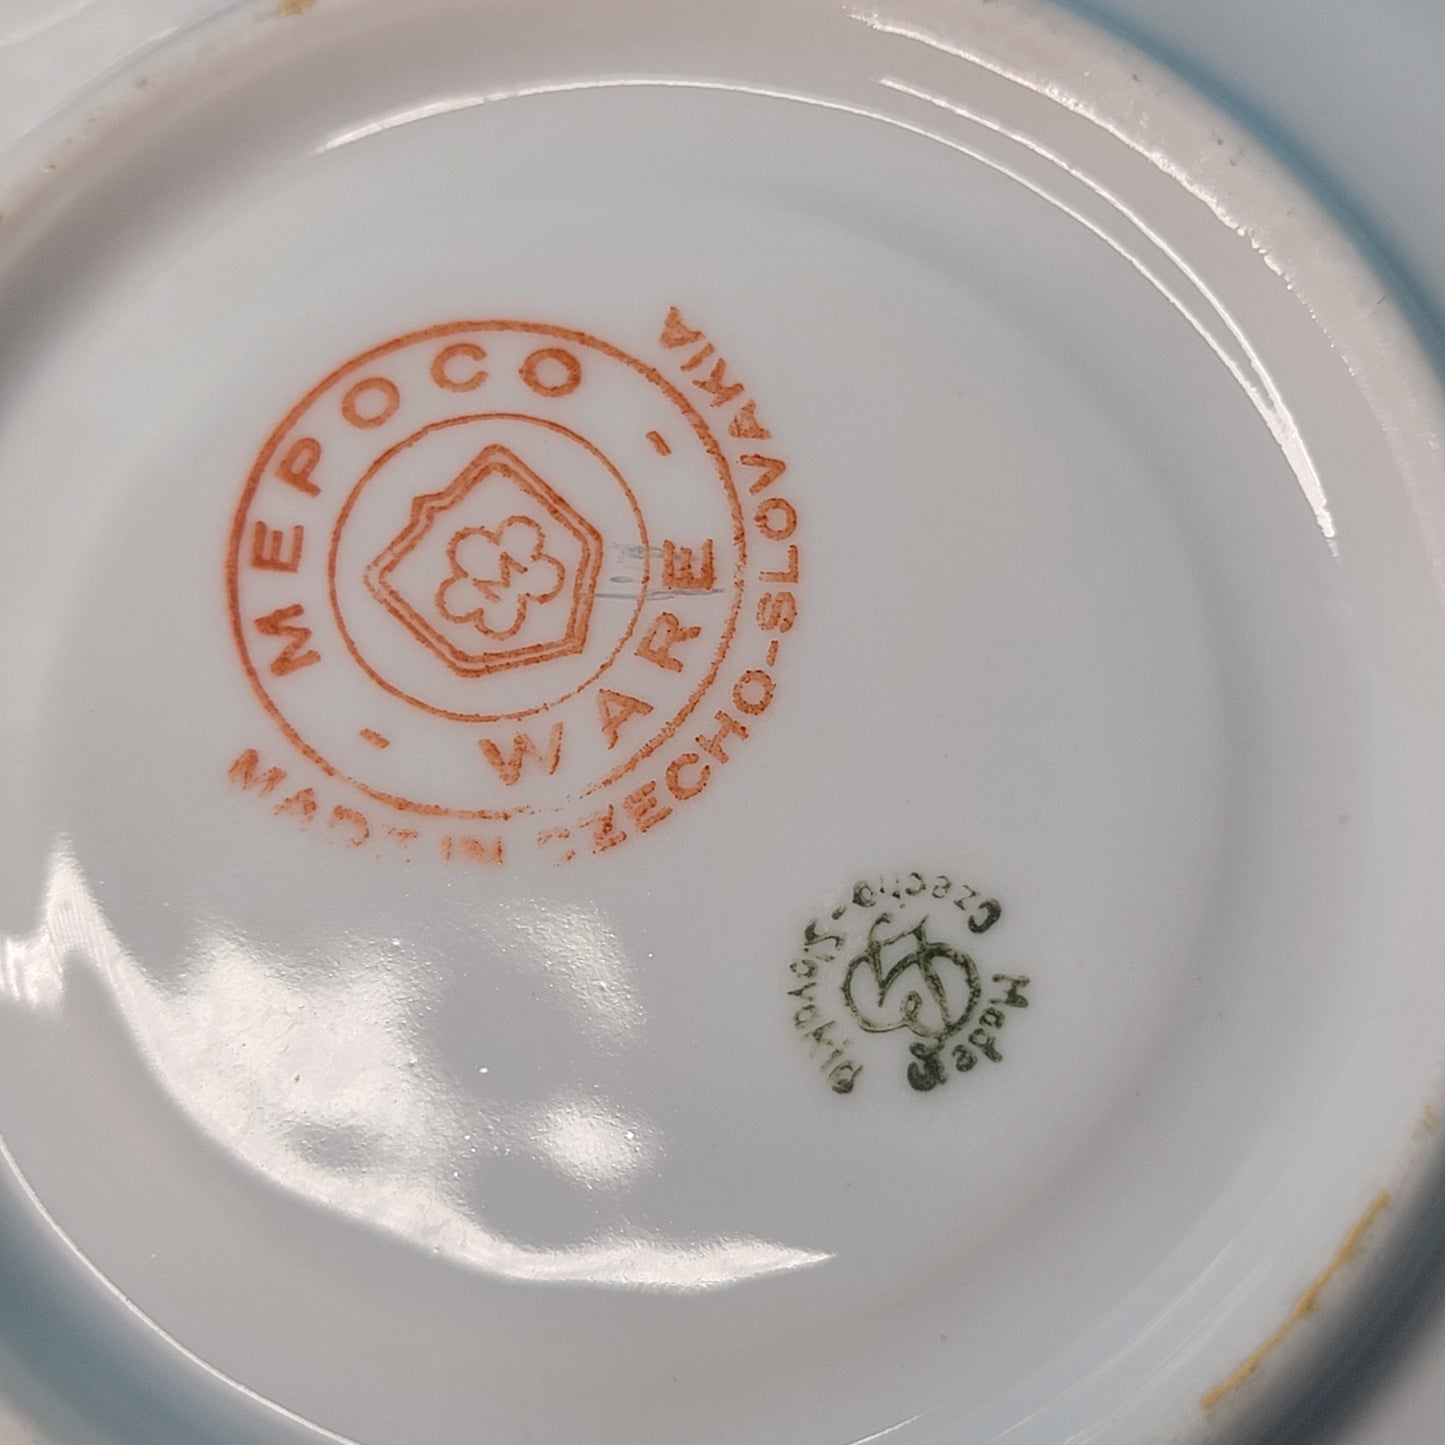 Mepoco Ware Czechoslovakian Lusterware Teacup and Saucer